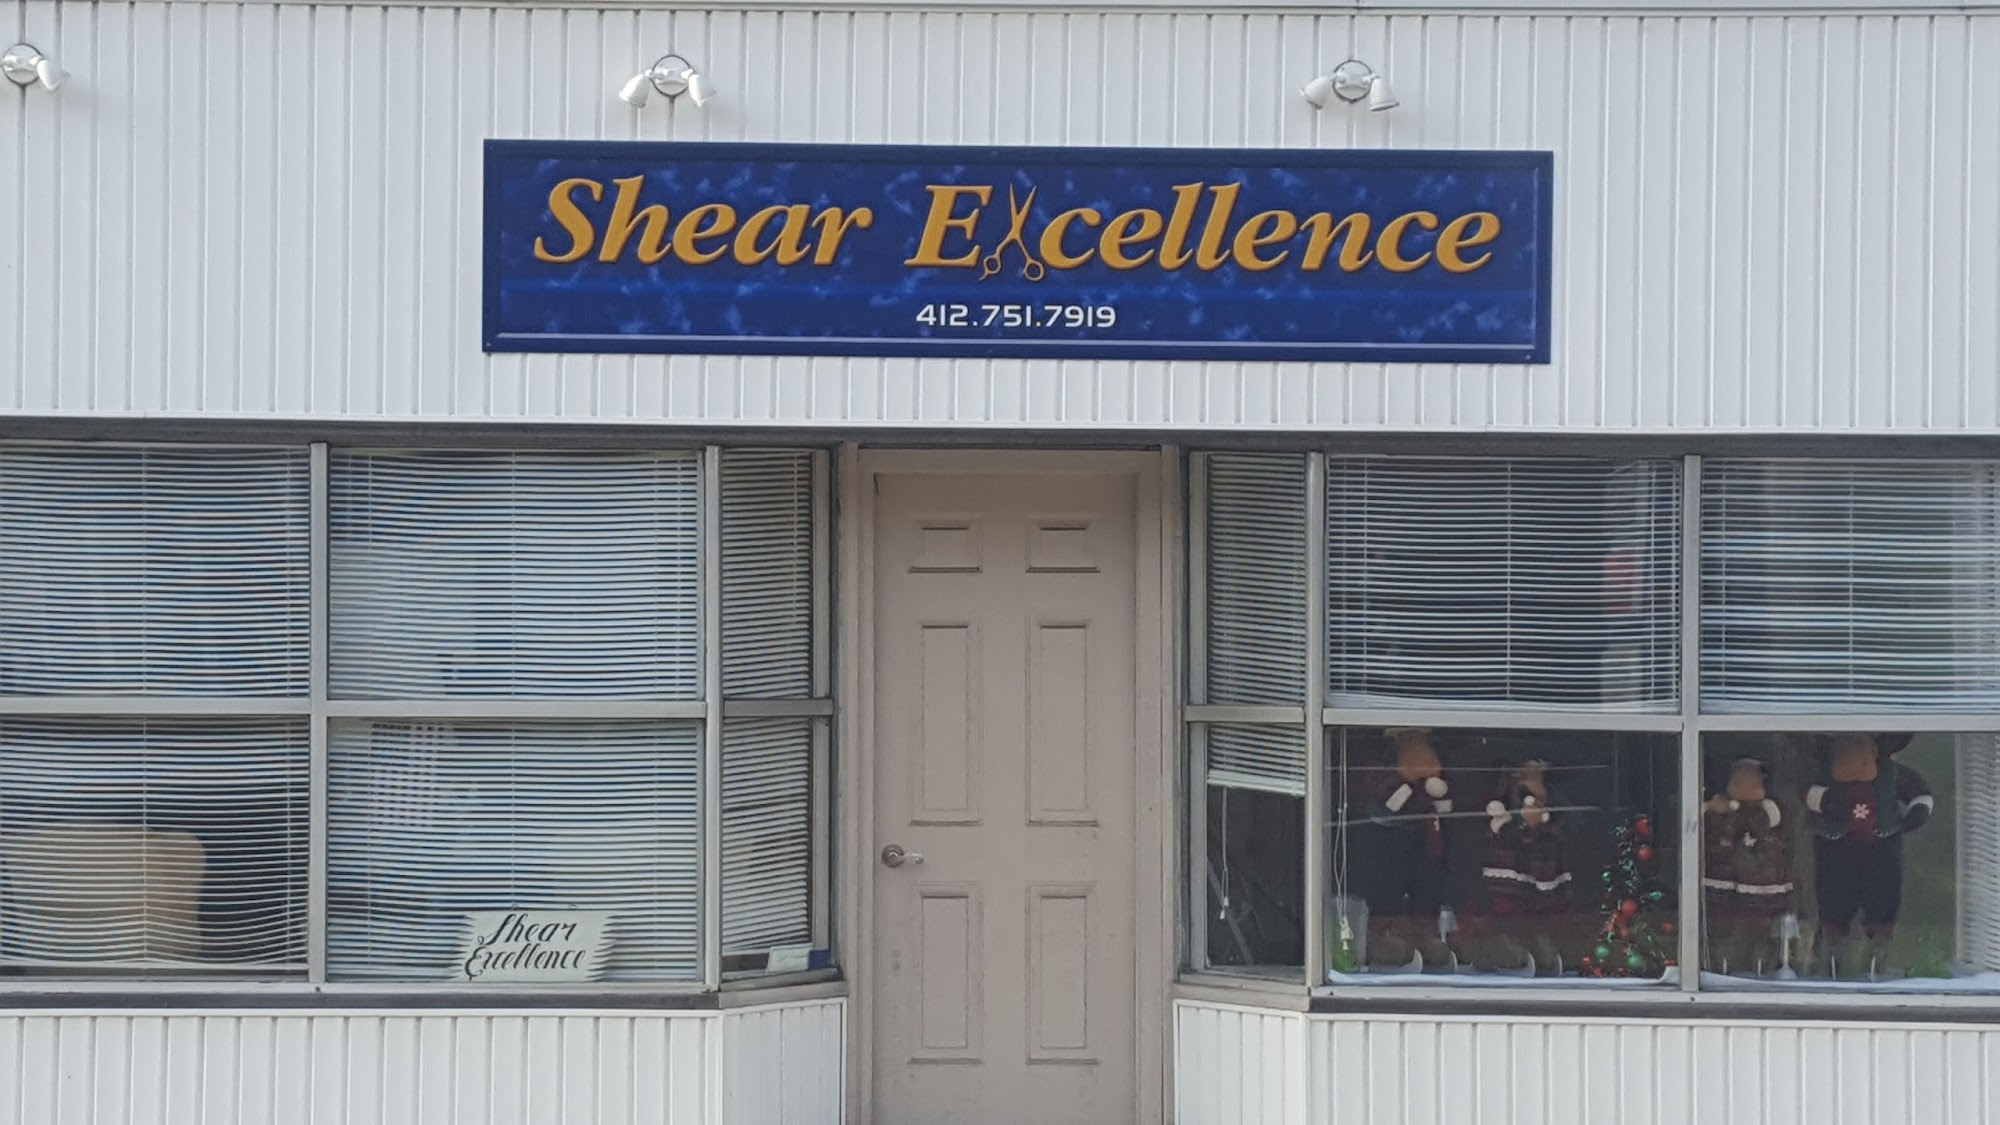 Shear Excellence 4700 Walnut St, McKeesport Pennsylvania 15132